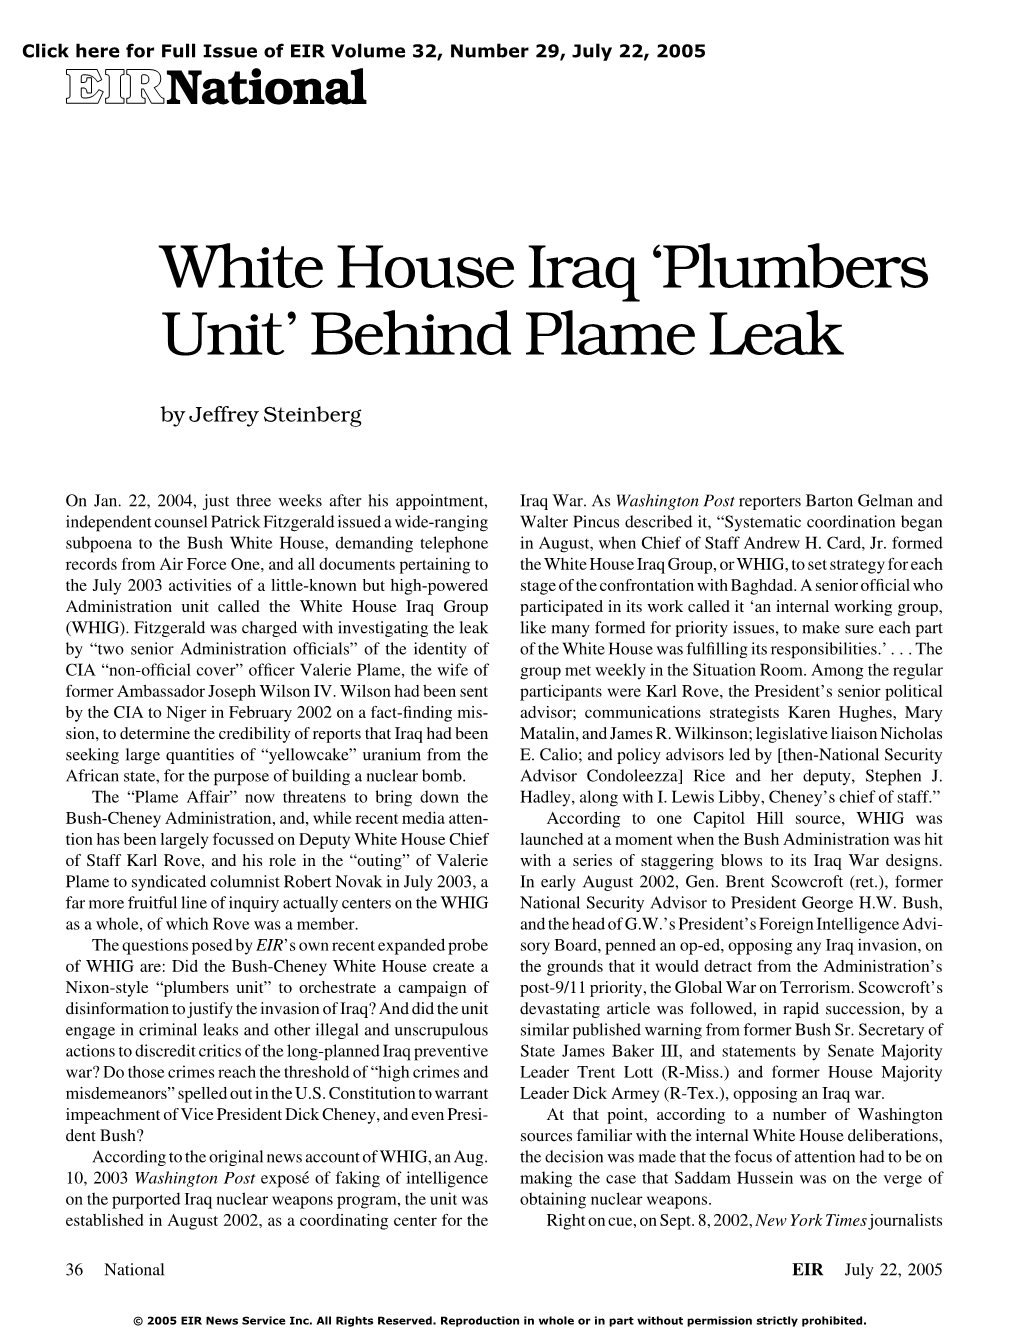 White House Iraq 'Plumbers Unit' Behind Plame Leak